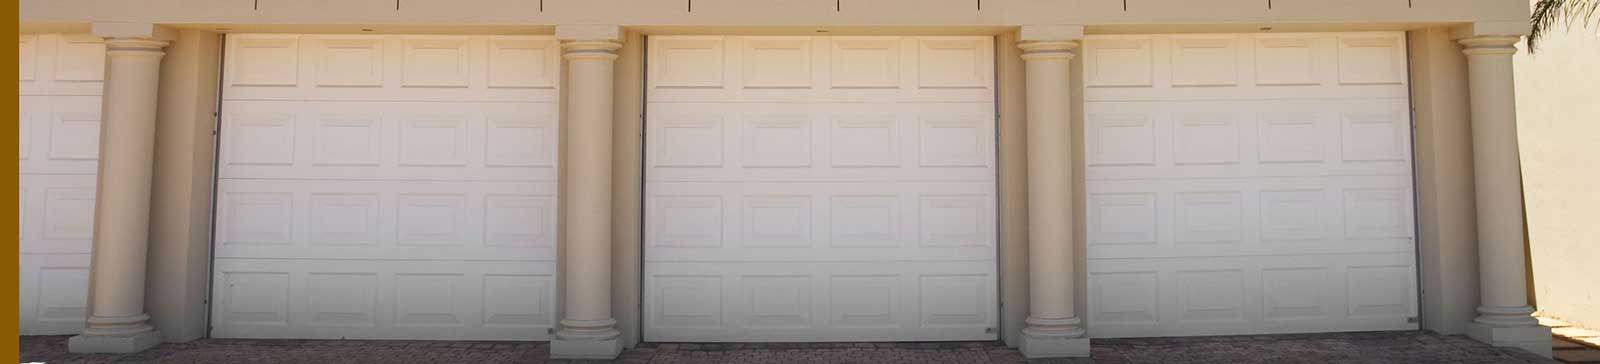 Garage Door Repair Experts Near Me - Stamford